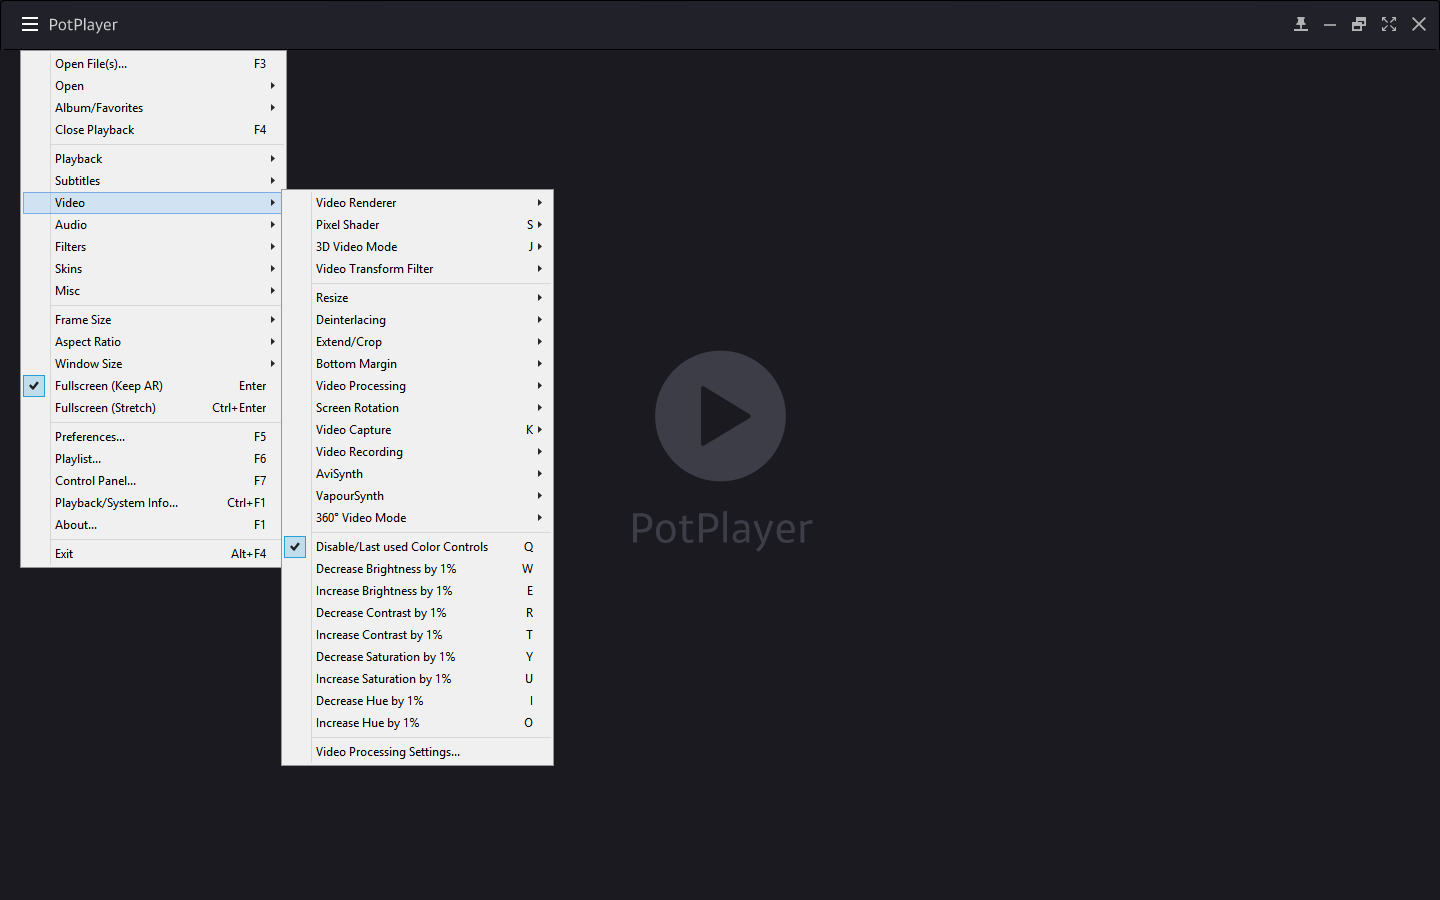 Daum PotPlayer 1.7.21953 download the last version for apple